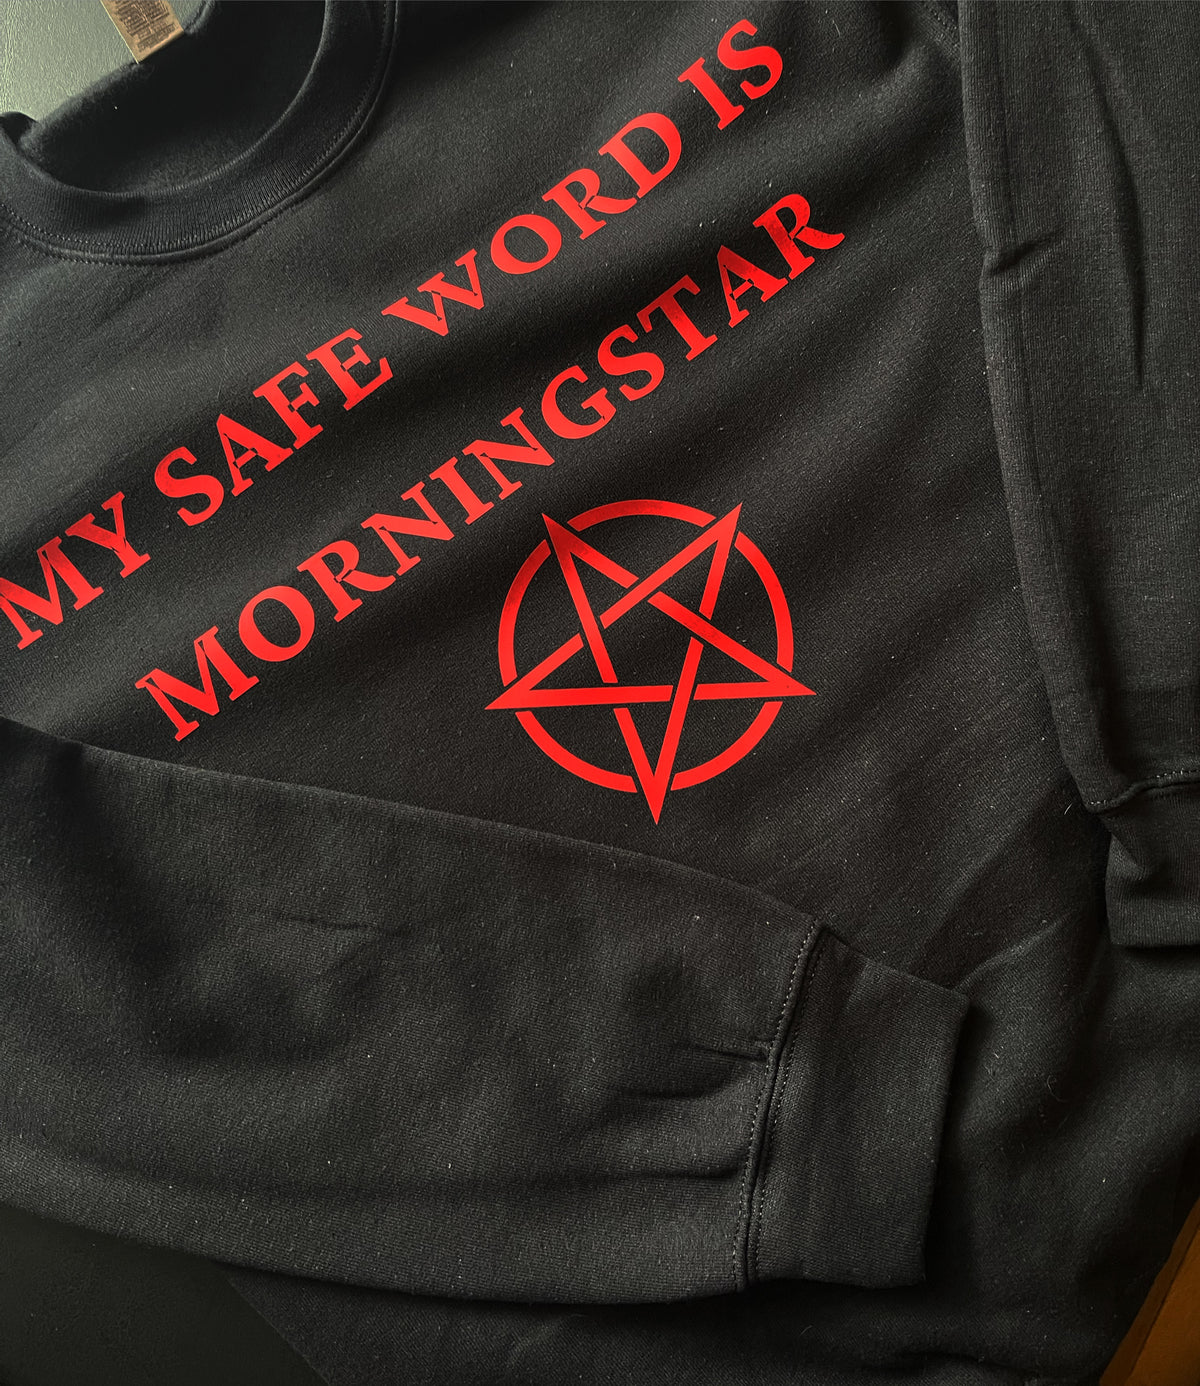 My Safe Word is Morningstar